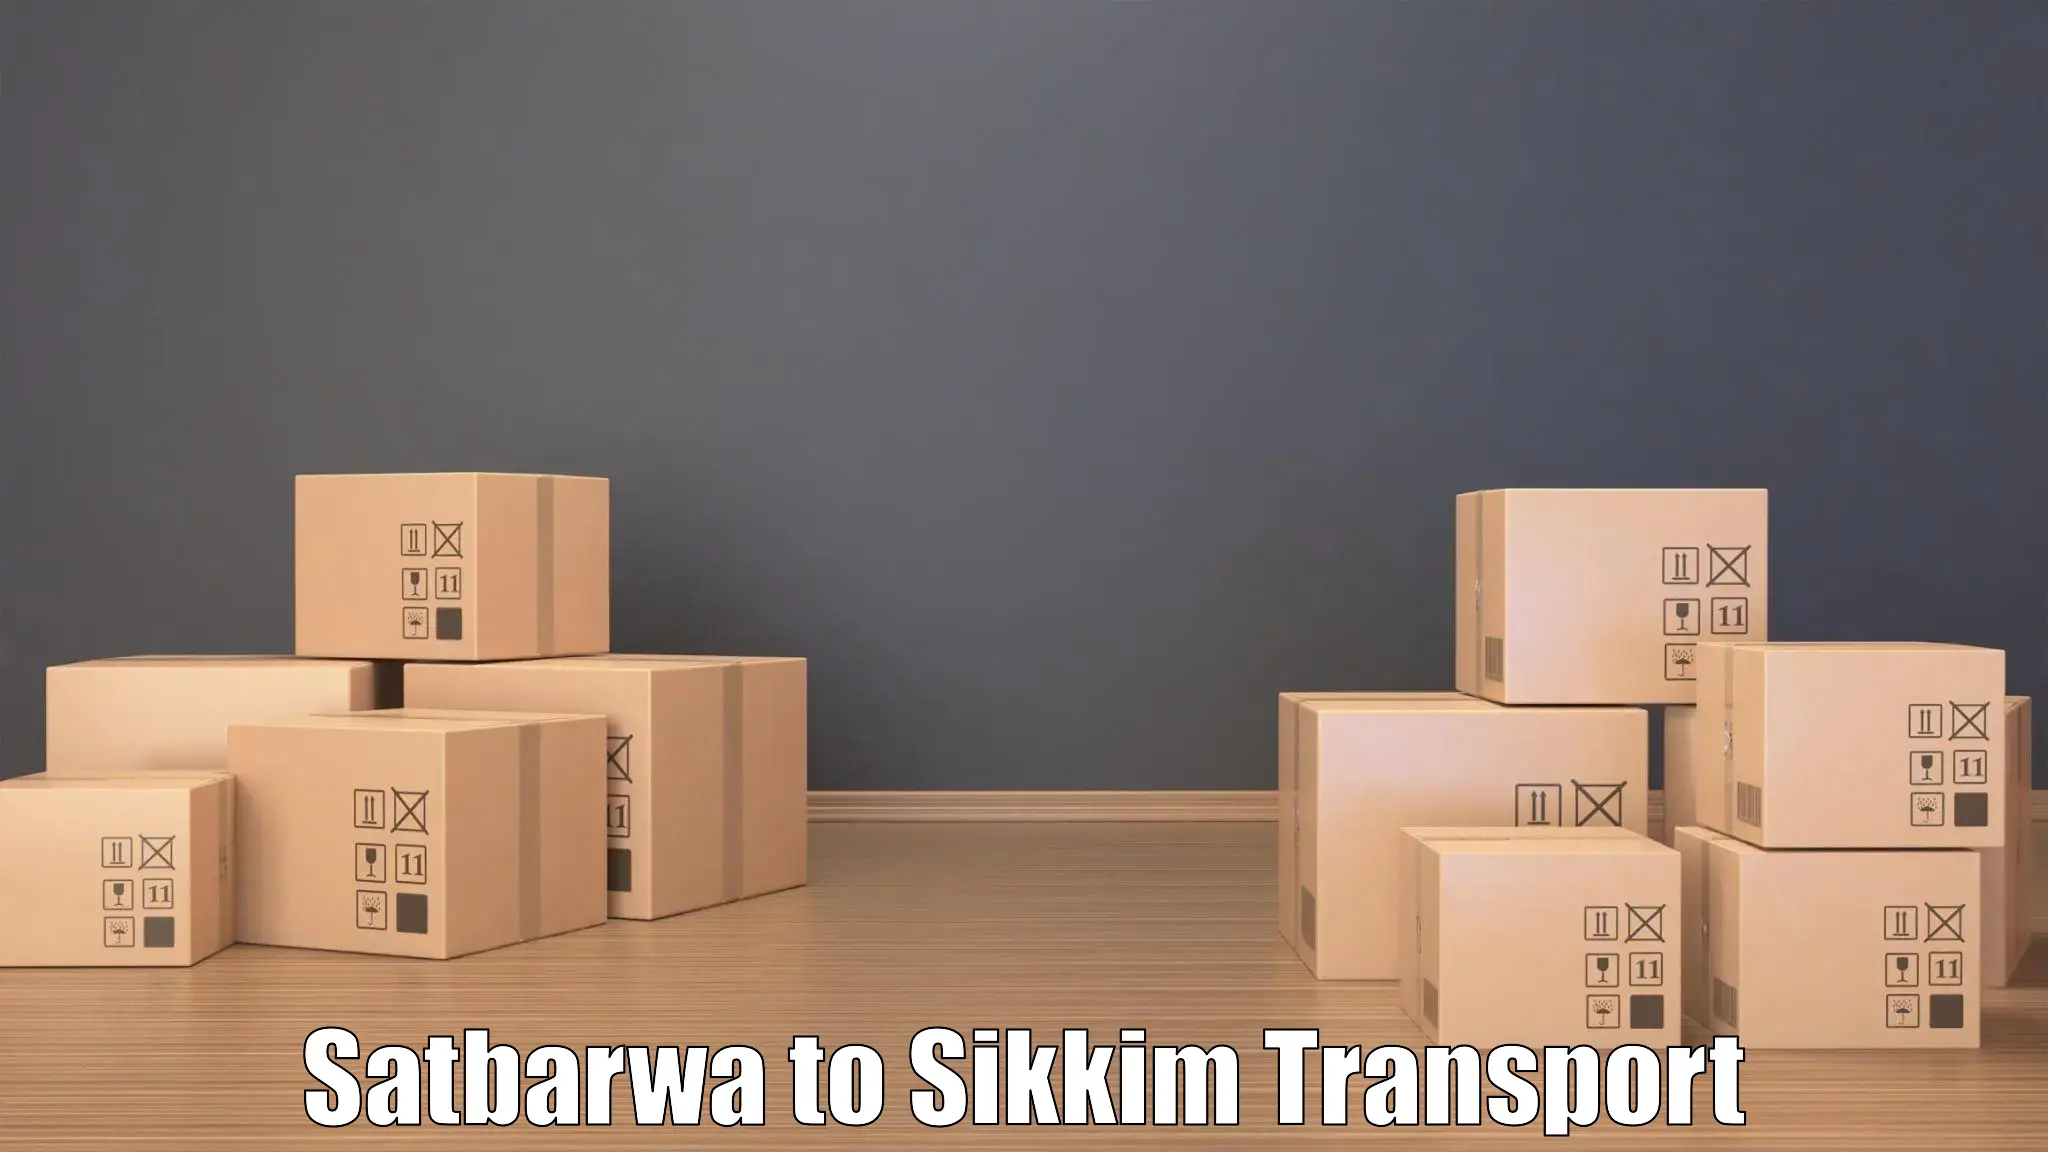 Cargo transport services Satbarwa to Pelling